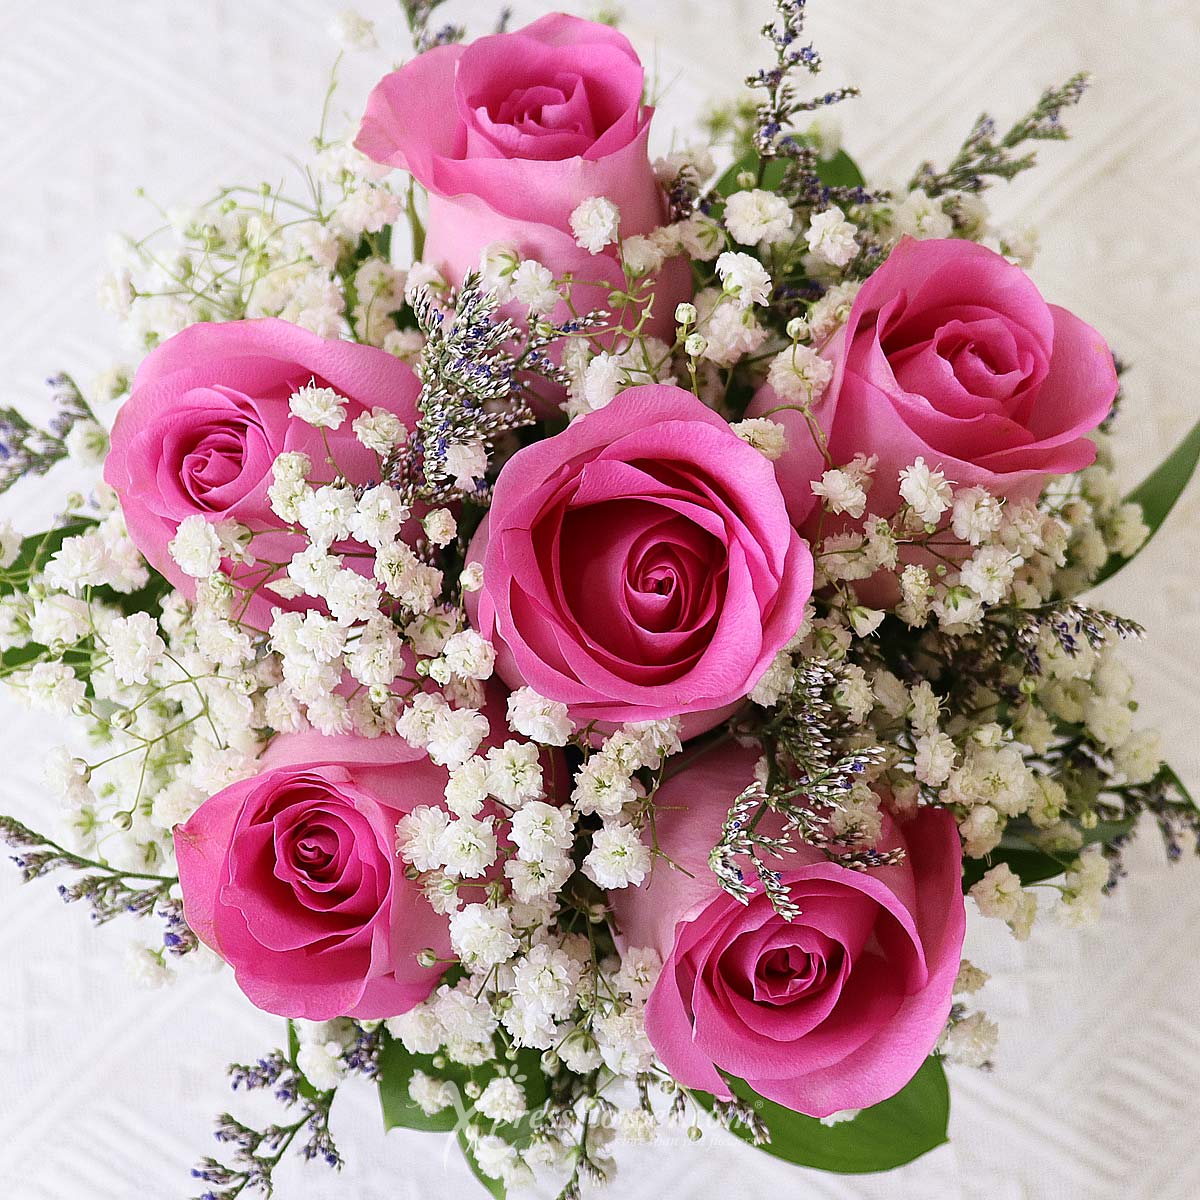 DSAR2302 Passionate Couplegenix (6 Dark pink Roses Disney Flower Arrangement) 1c